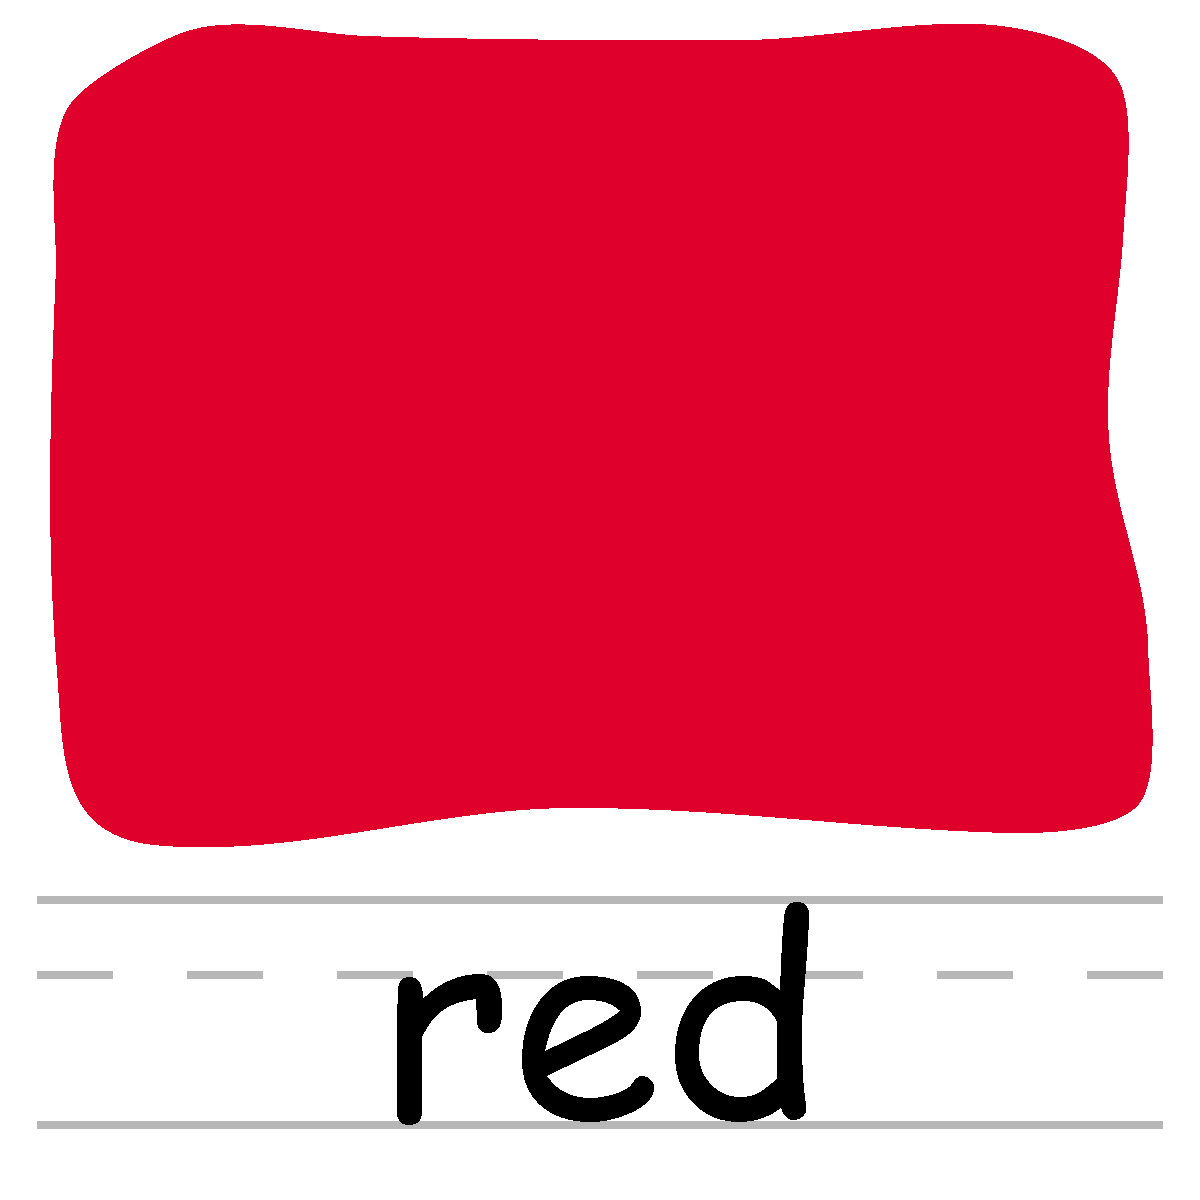 Red Clip Art Car | Clipart Panda - Free Clipart Images